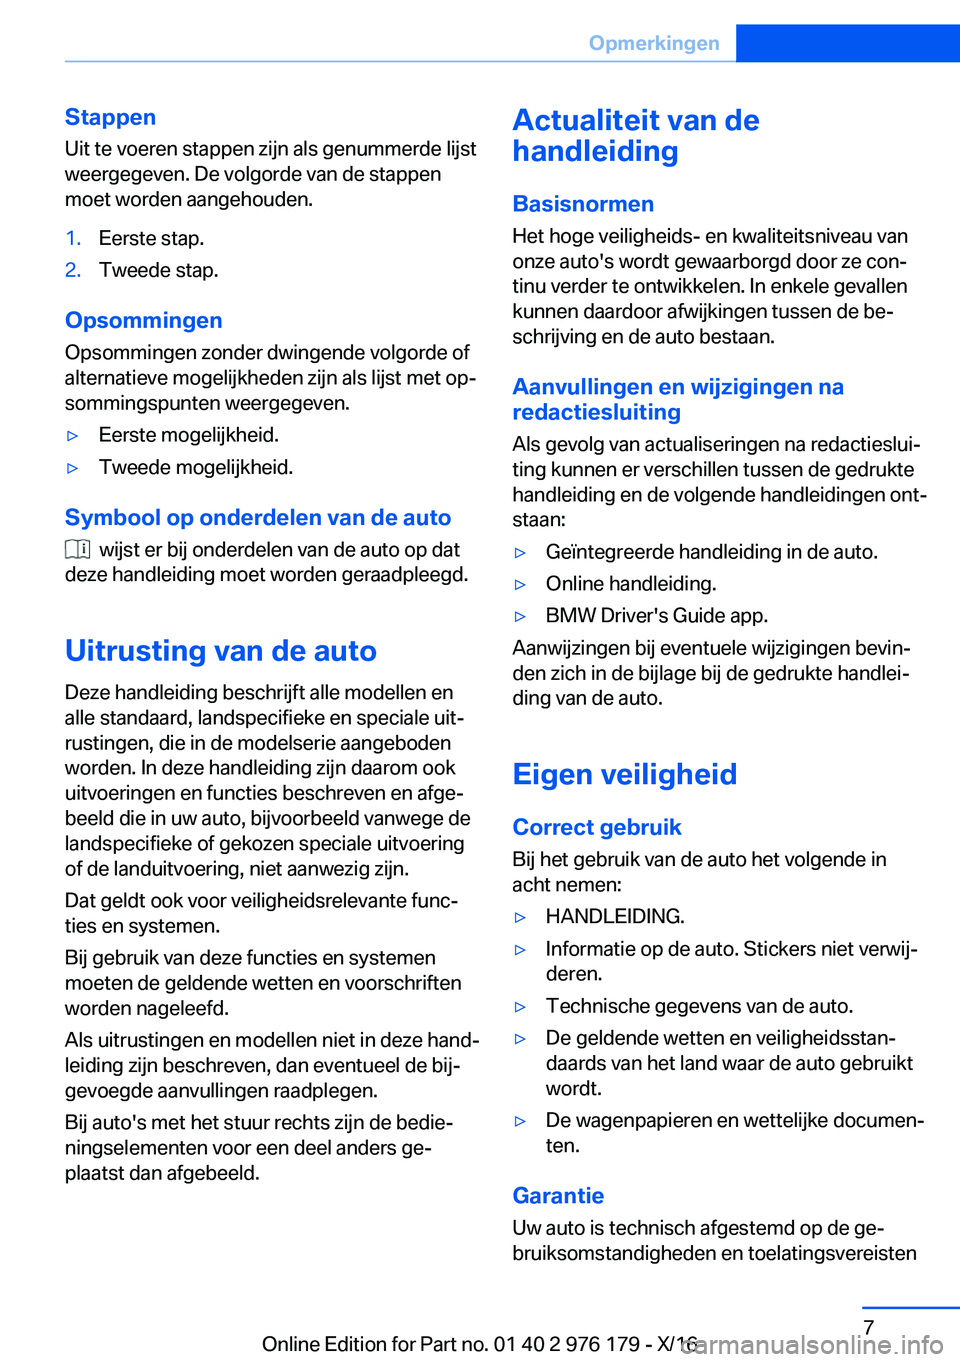 BMW X5 M 2017  Instructieboekjes (in Dutch) �S�t�a�p�p�e�n
�U�i�t� �t�e� �v�o�e�r�e�n� �s�t�a�p�p�e�n� �z�i�j�n� �a�l�s� �g�e�n�u�m�m�e�r�d�e� �l�i�j�s�t �w�e�e�r�g�e�g�e�v�e�n�.� �D�e� �v�o�l�g�o�r�d�e� �v�a�n� �d�e� �s�t�a�p�p�e�n�m�o�e�t� �w